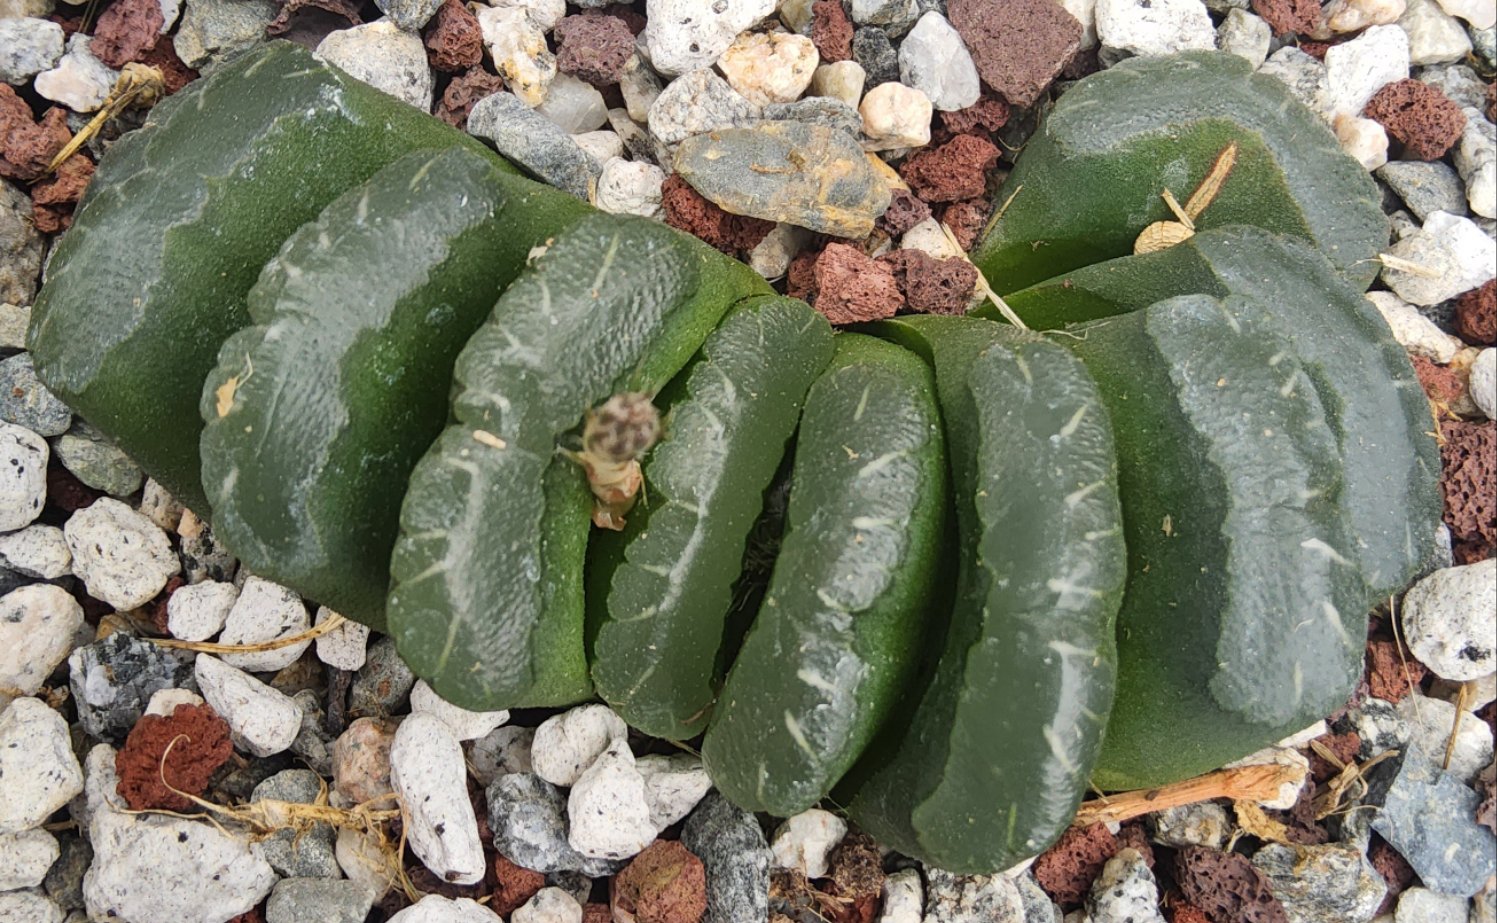 Haworthia truncata v truncata (Dysselsdorp) Live Succulent Growing in 6 Inch